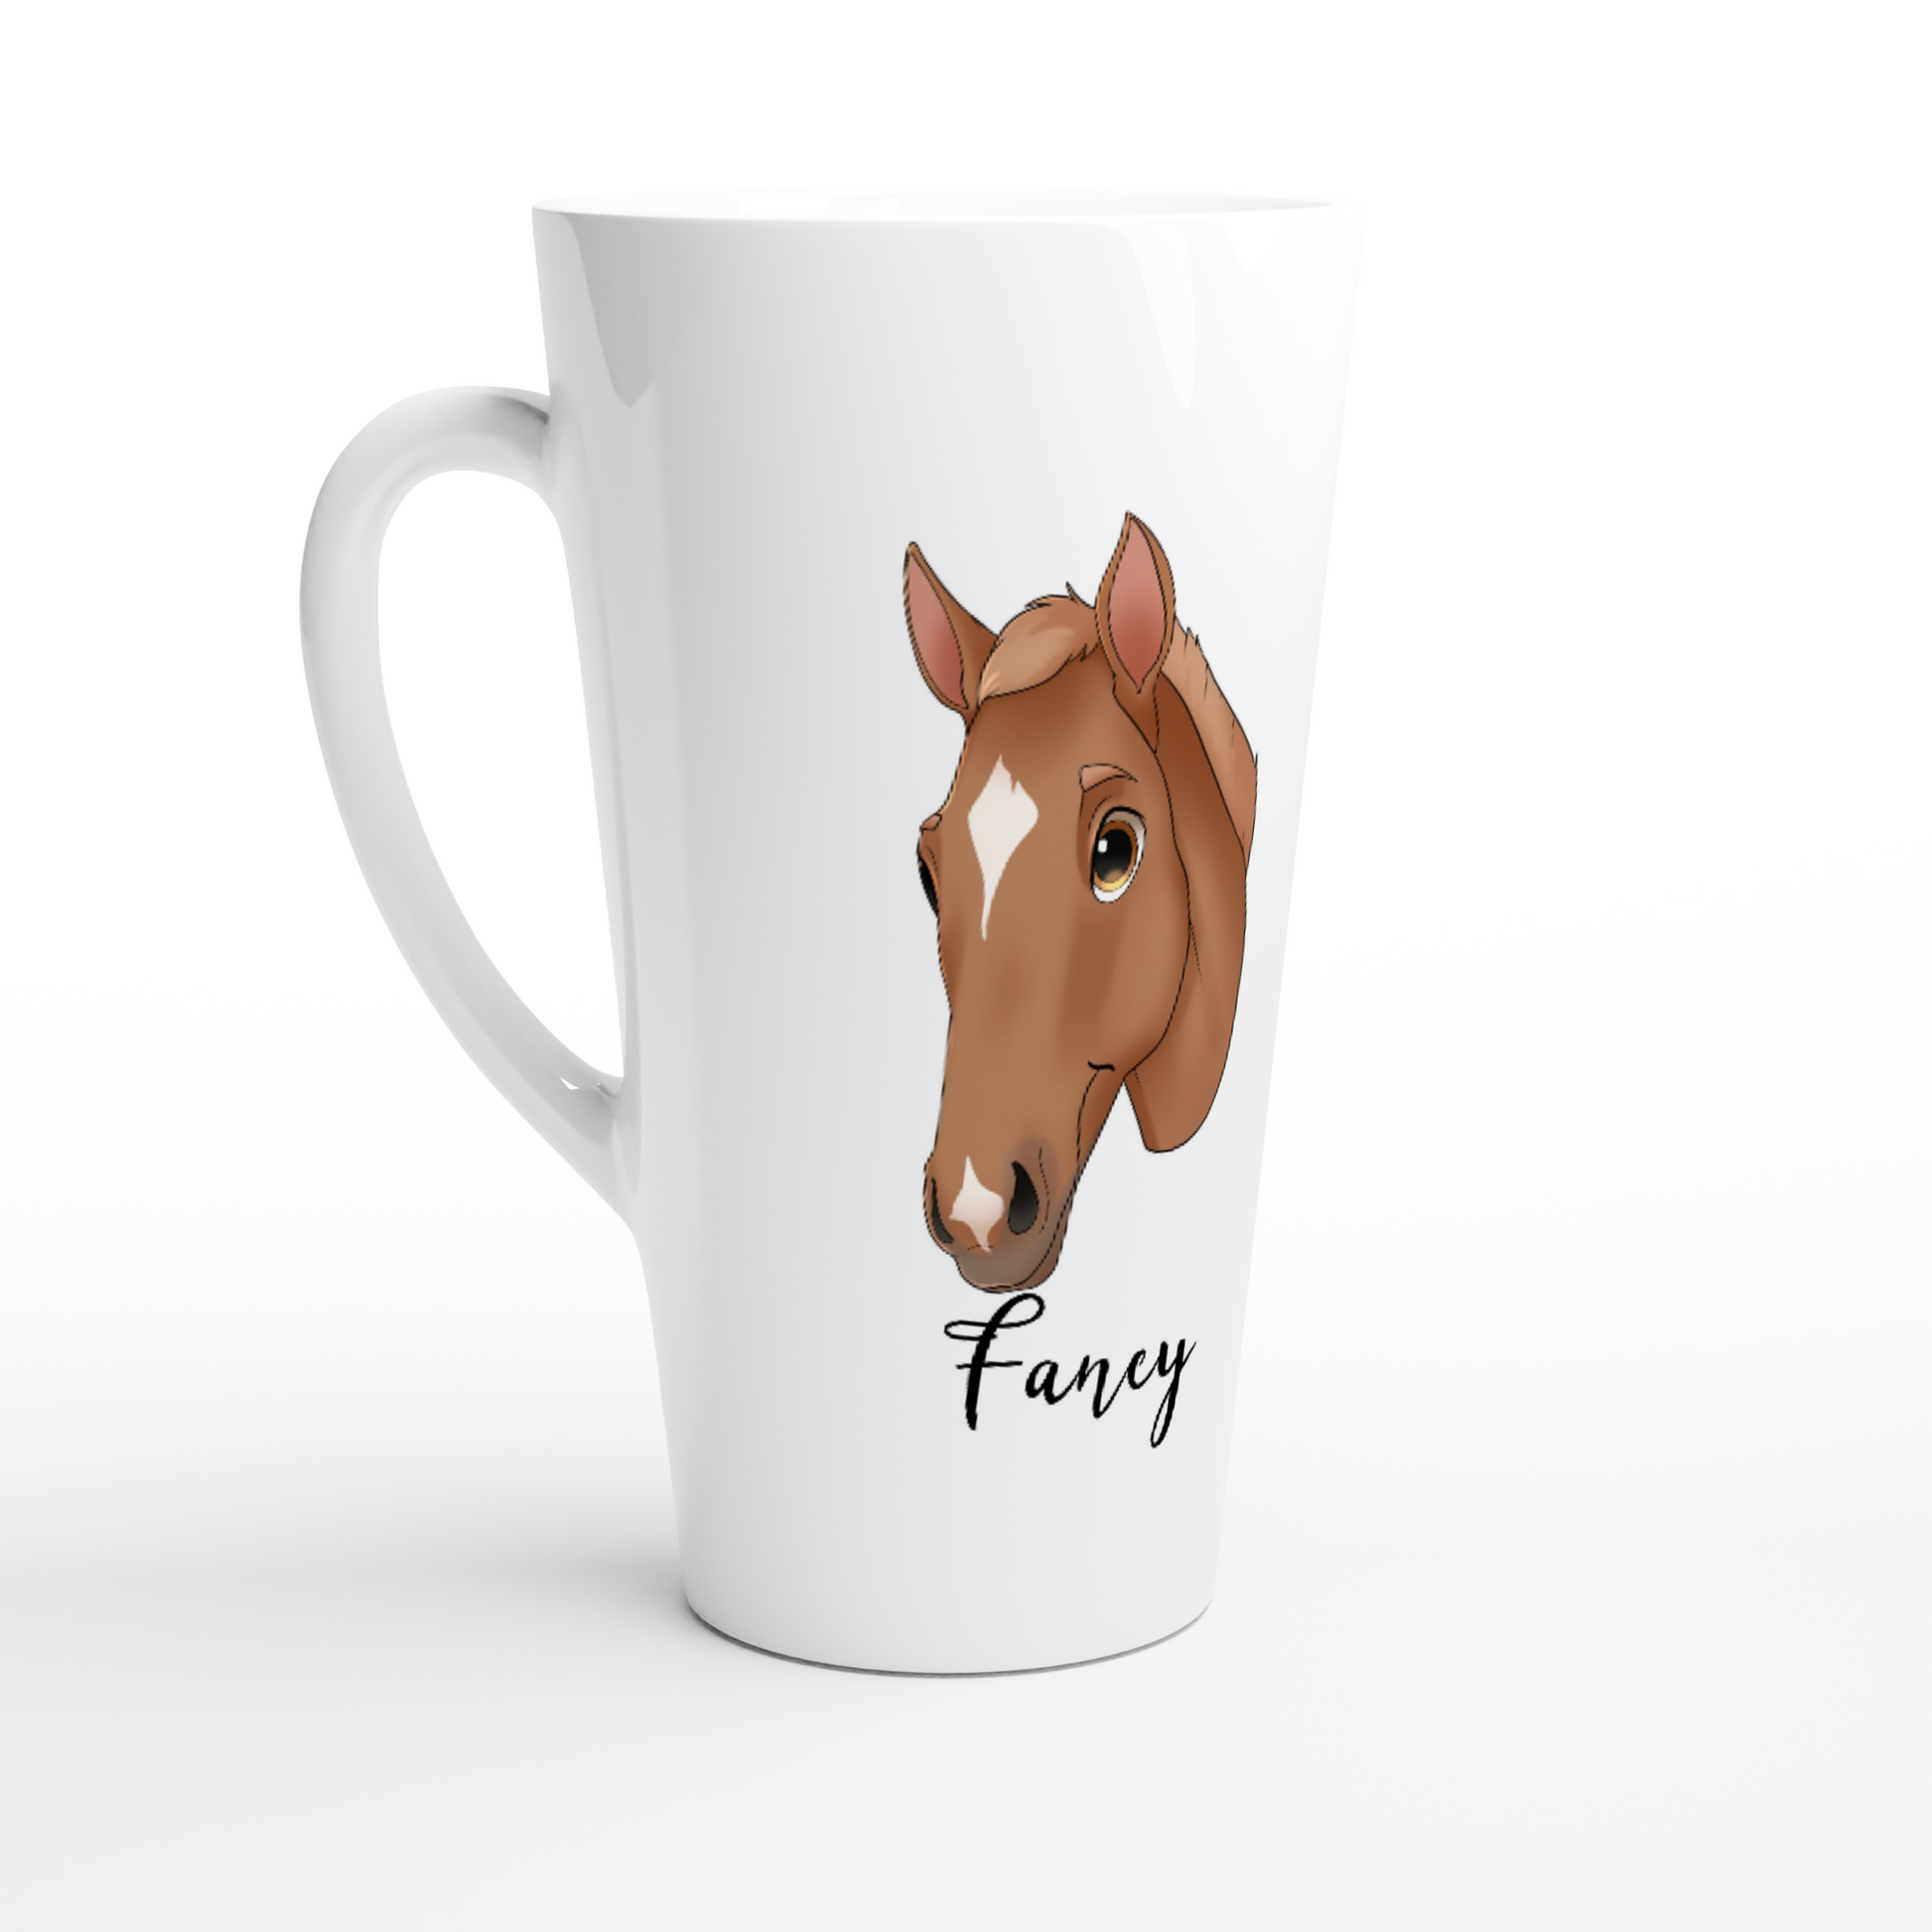 Hand Drawn Horse || Latte 17oz Ceramic Mug - Fairytale Cartoon - Personalized; Hand drawn & personalized with your horse